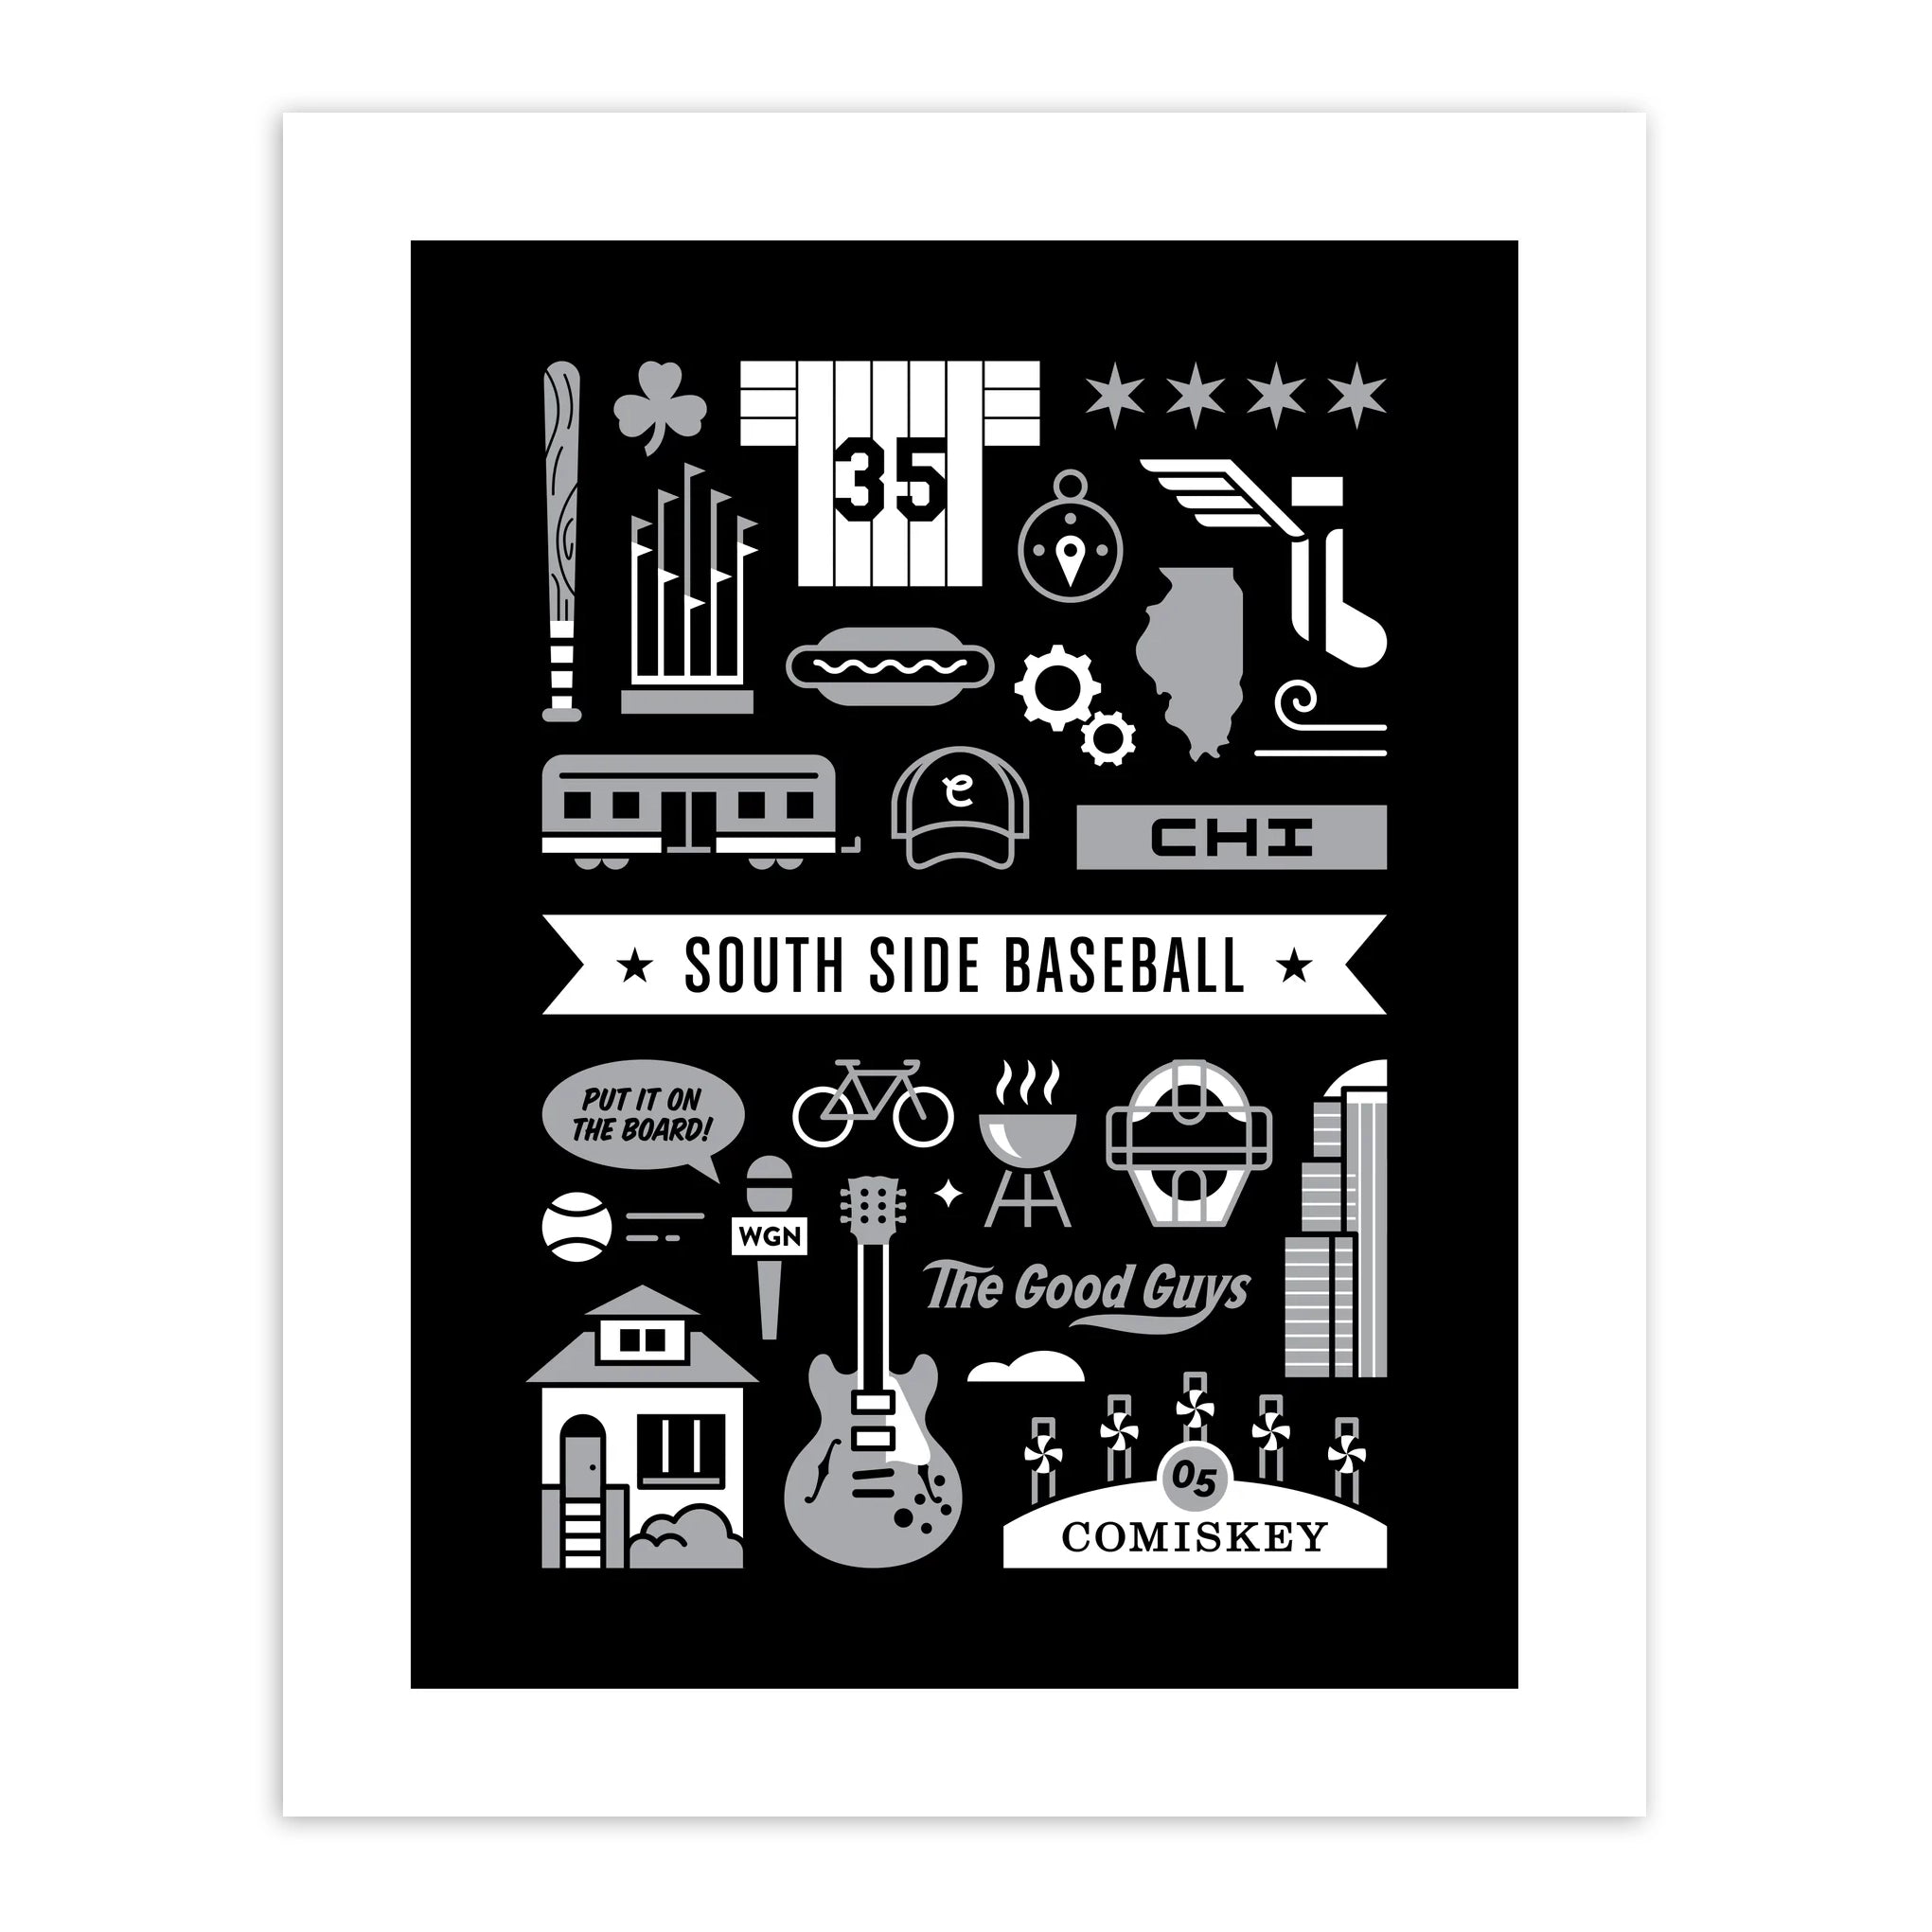 Chi South Side Baseball Shirt